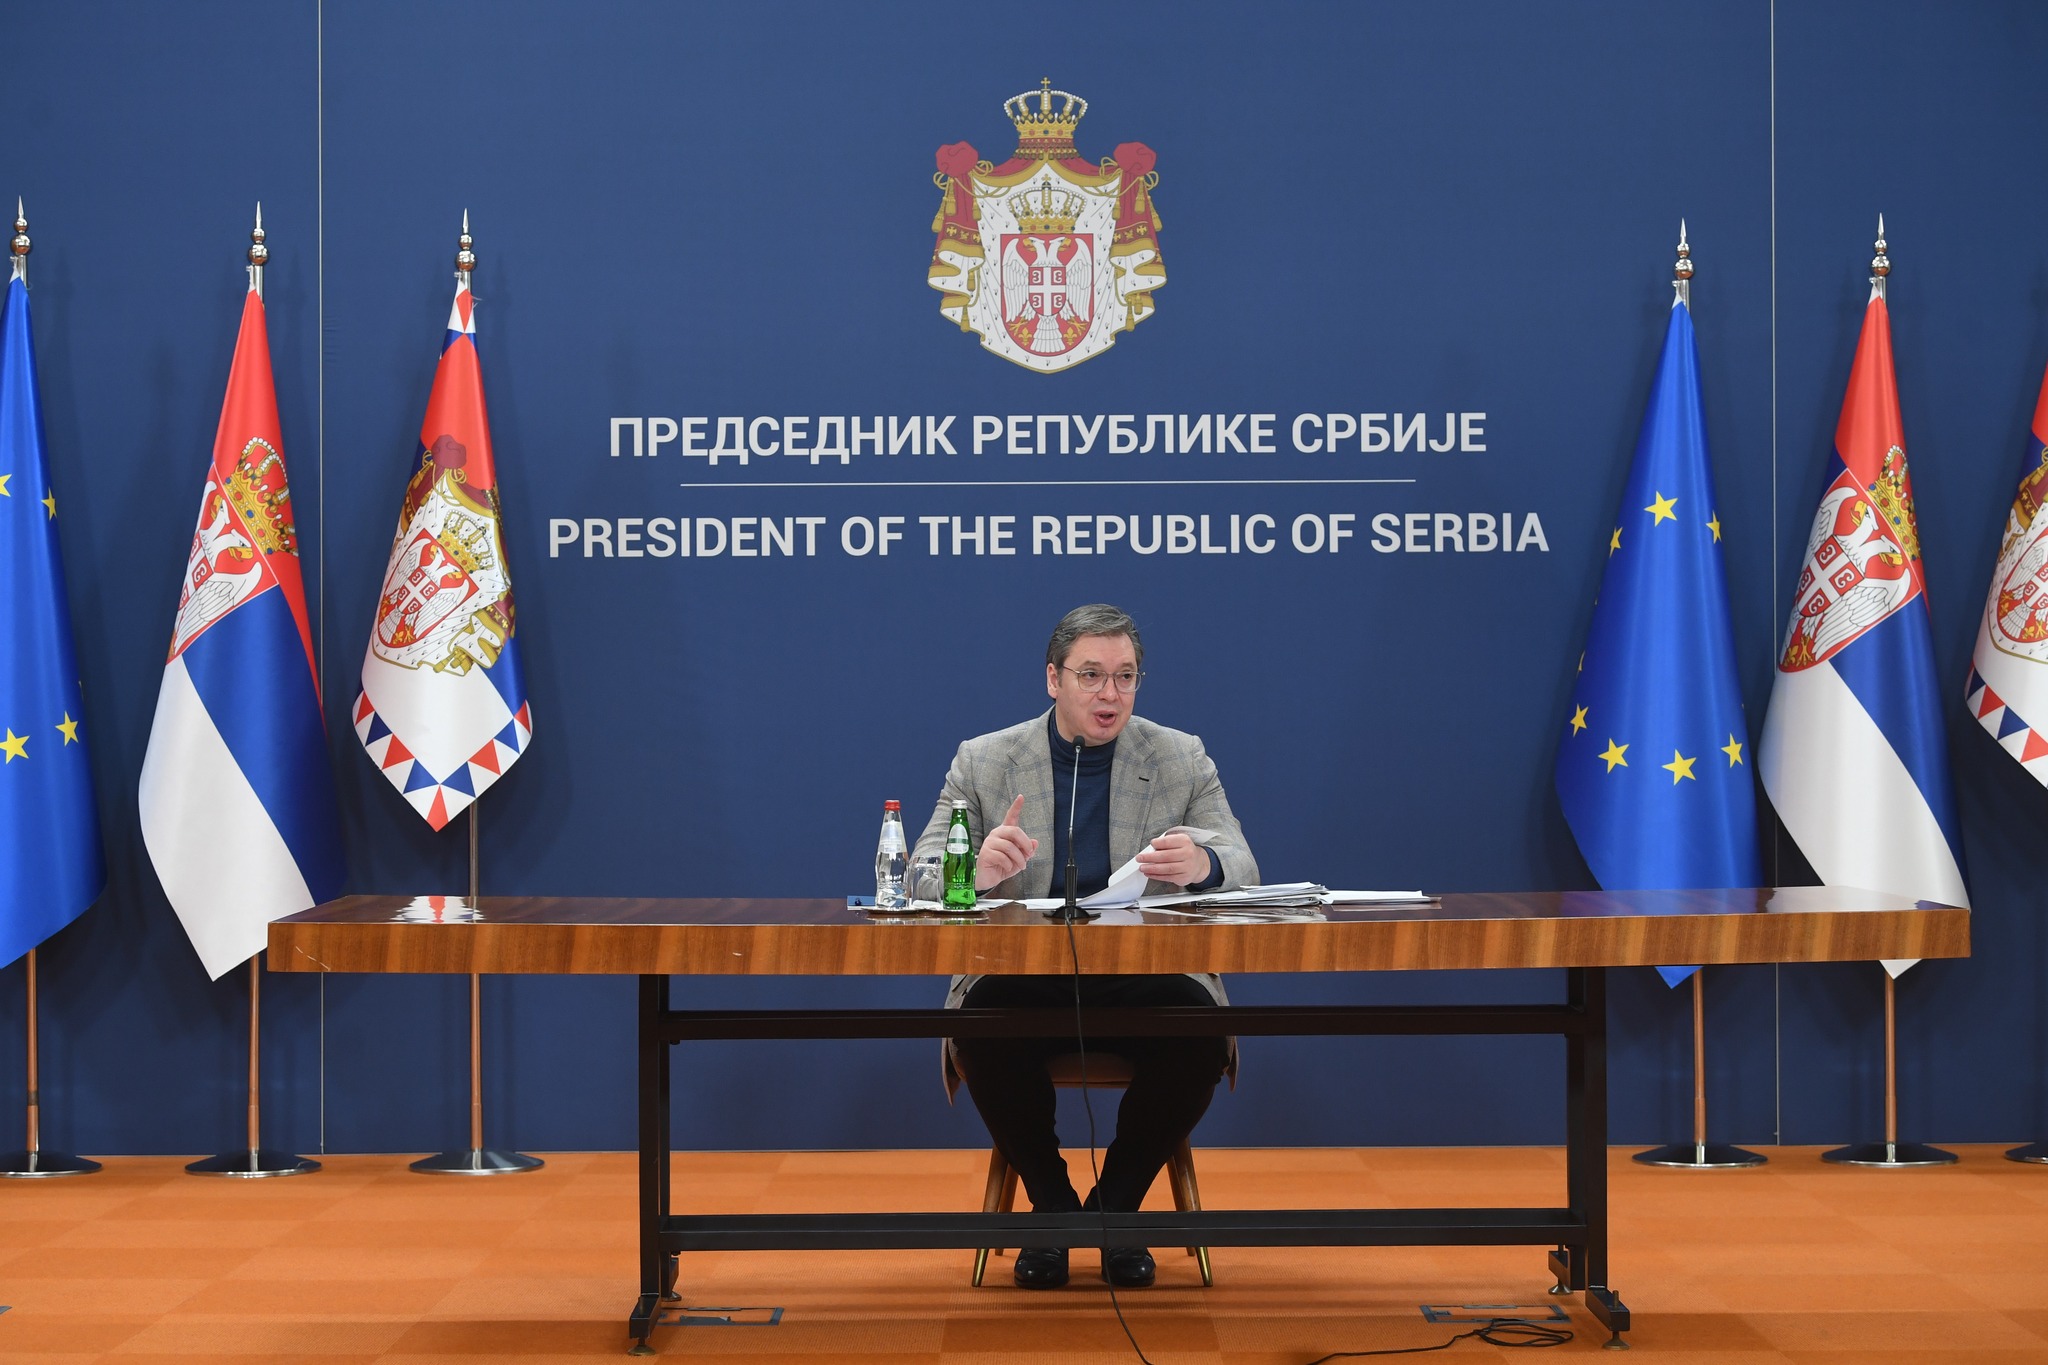 President of Serbia Aleksandar Vučić